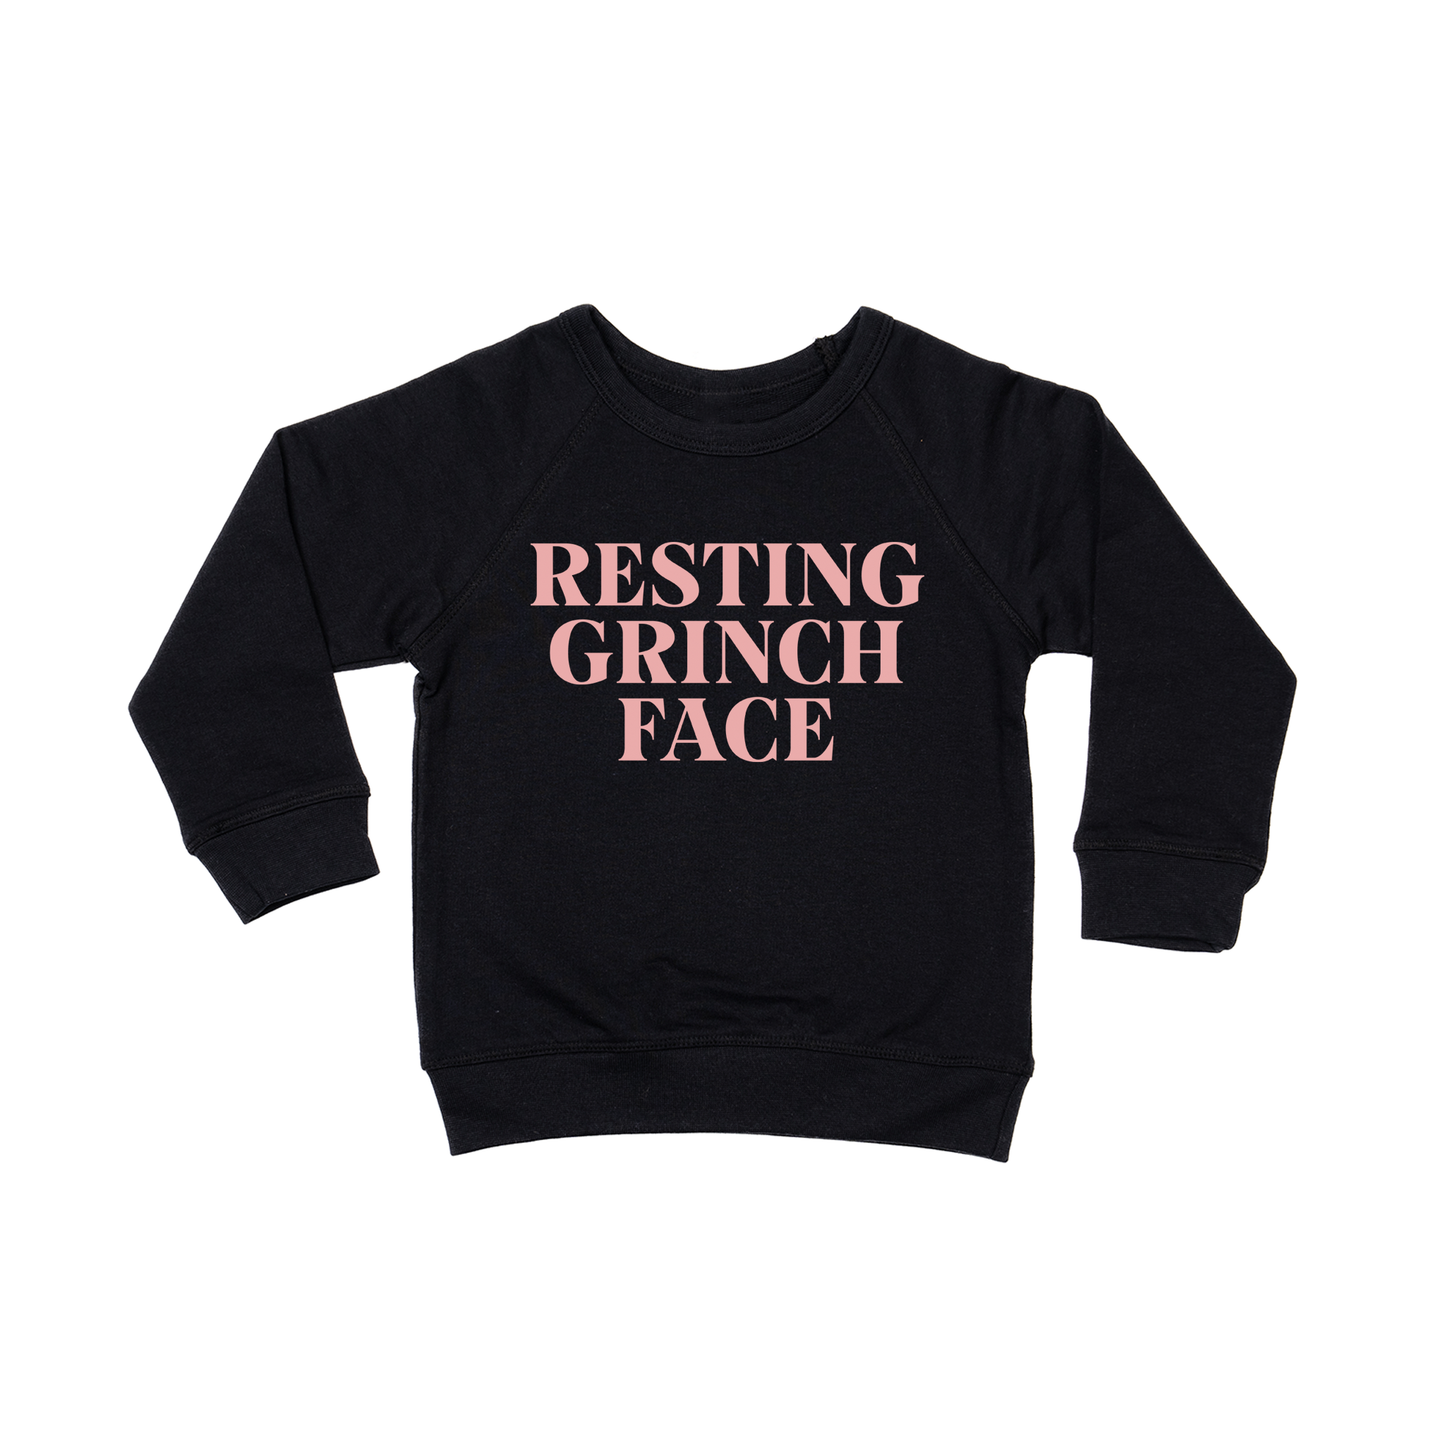 Resting Grinch Face (Pink) - Kids Sweatshirt (Black)